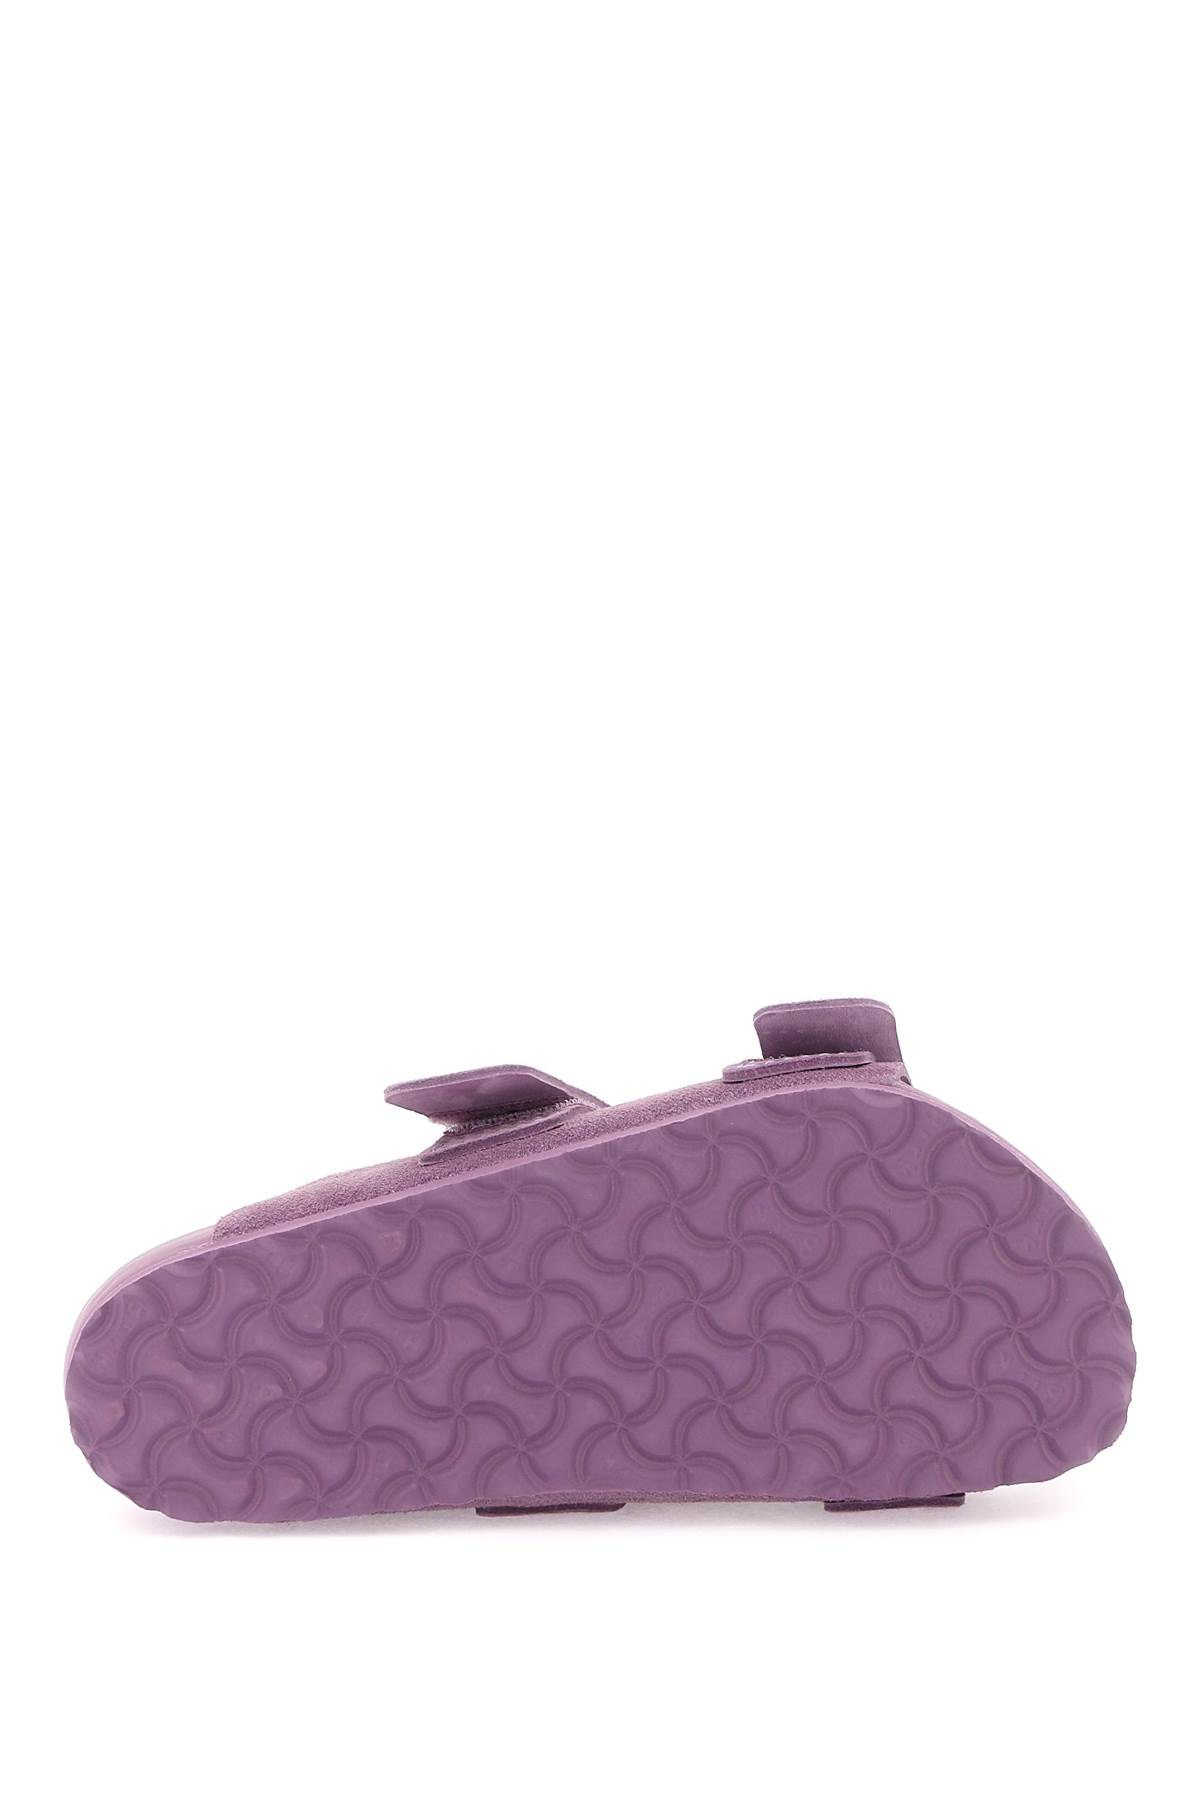 Shop Birkenstock Uji Slides In Mauve (purple)